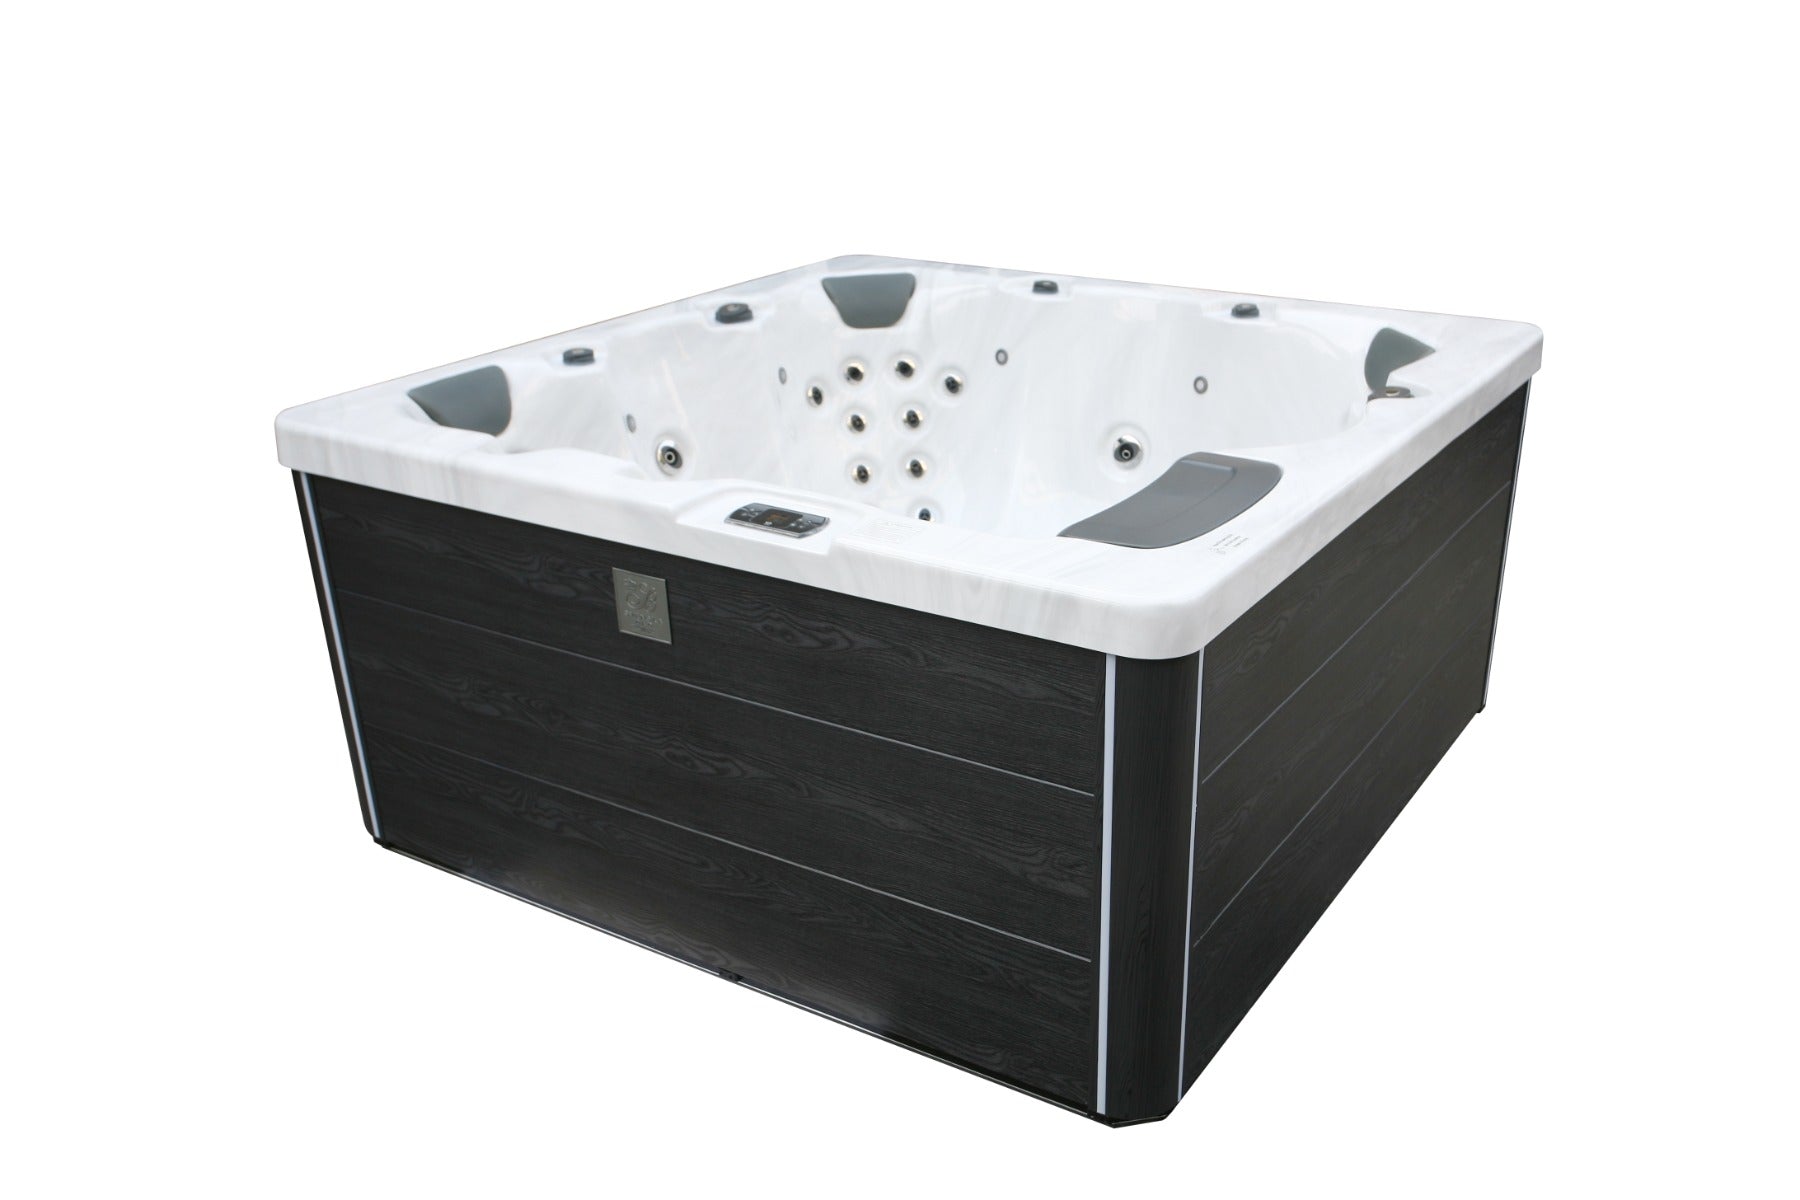 Milano II (13A Plug & Play) hot tub by H2O Hot Tubs